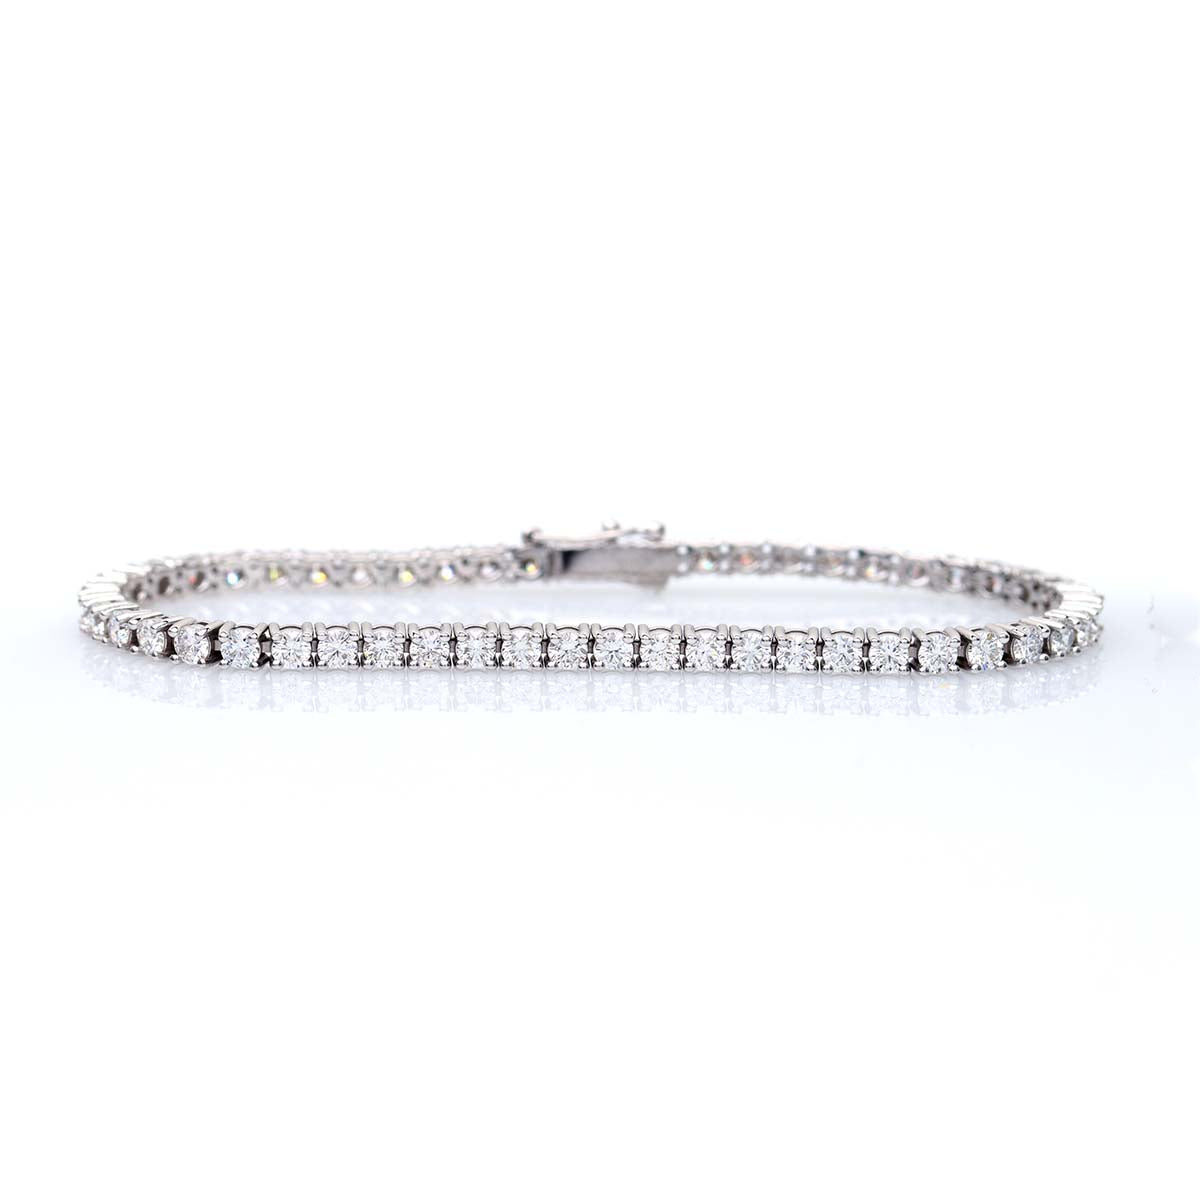 14k white gold four prong diamond tennis bracelet 5 carats total weight #BCLT5CT-1